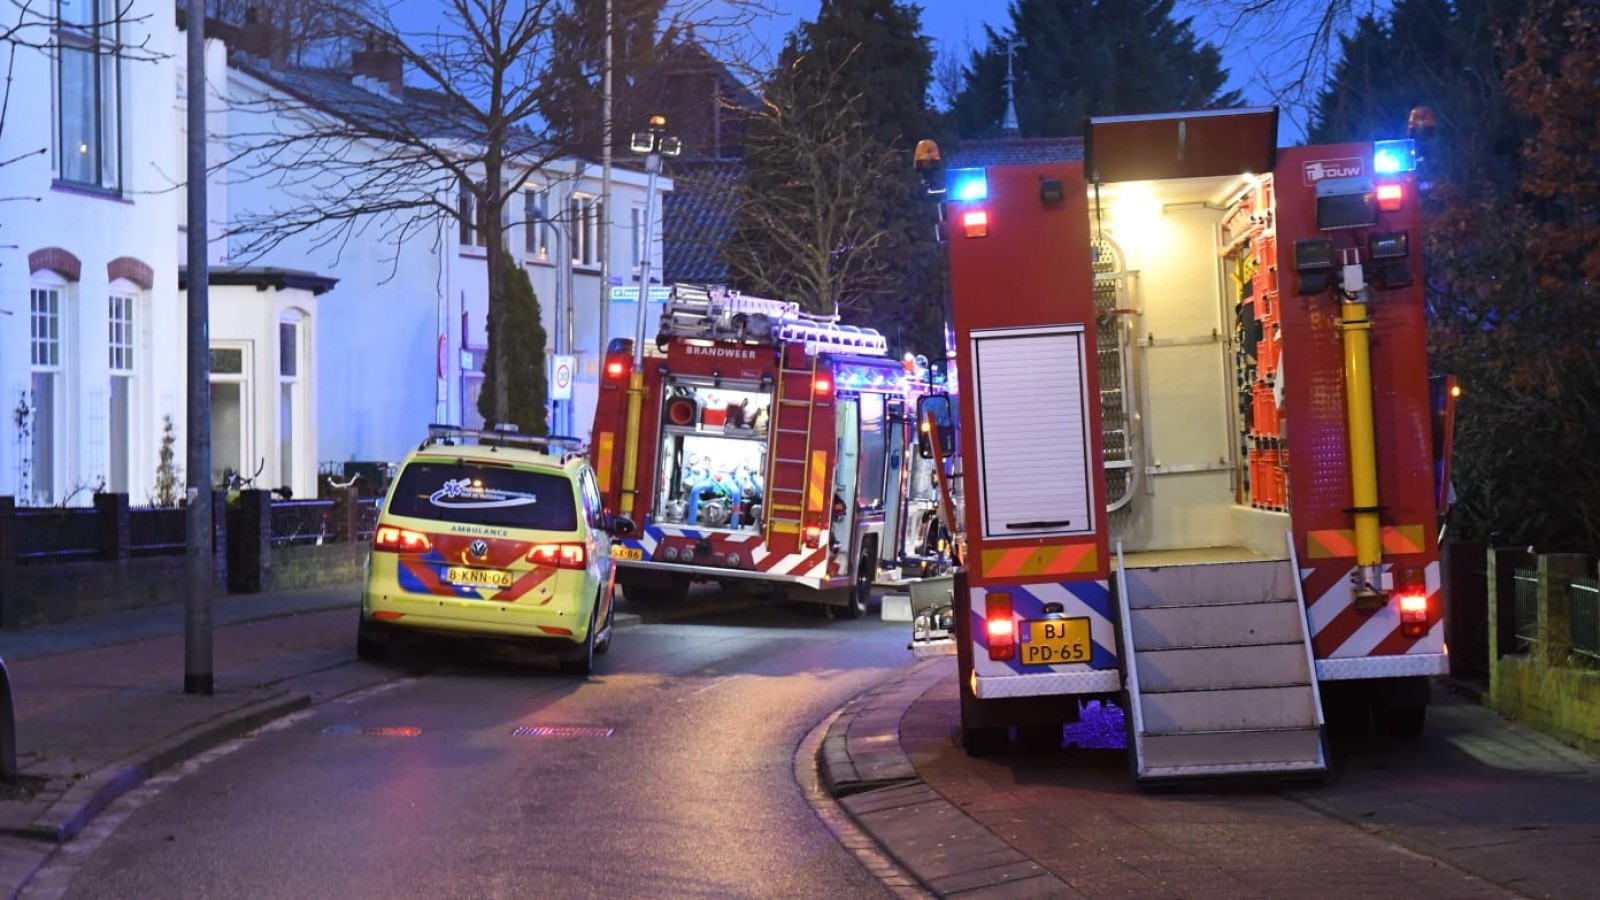 Scooteraar raakt bekneld onder bestelbus na ongeluk in Hilversum